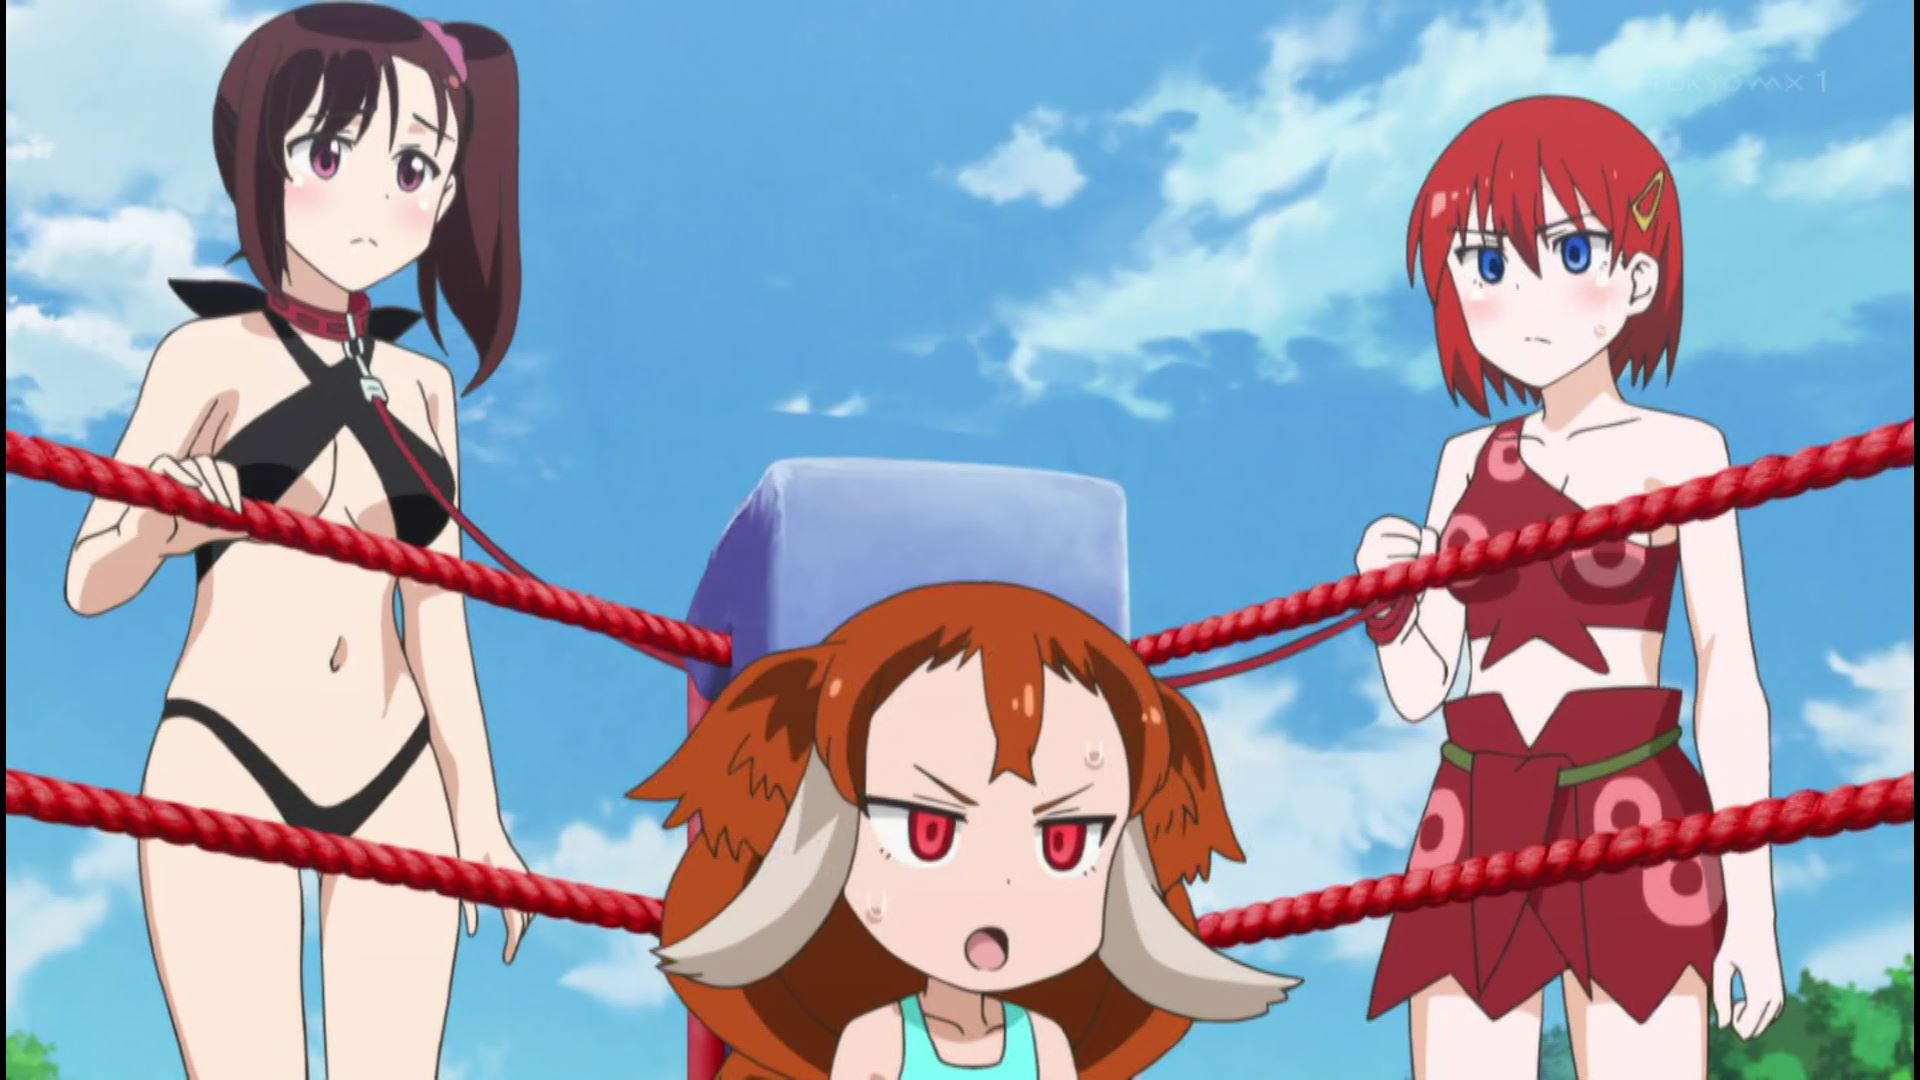 Anime [Shimarenuse] Seaton Gakuen] scene that girls become insanely erotic costumes in episode 12 16